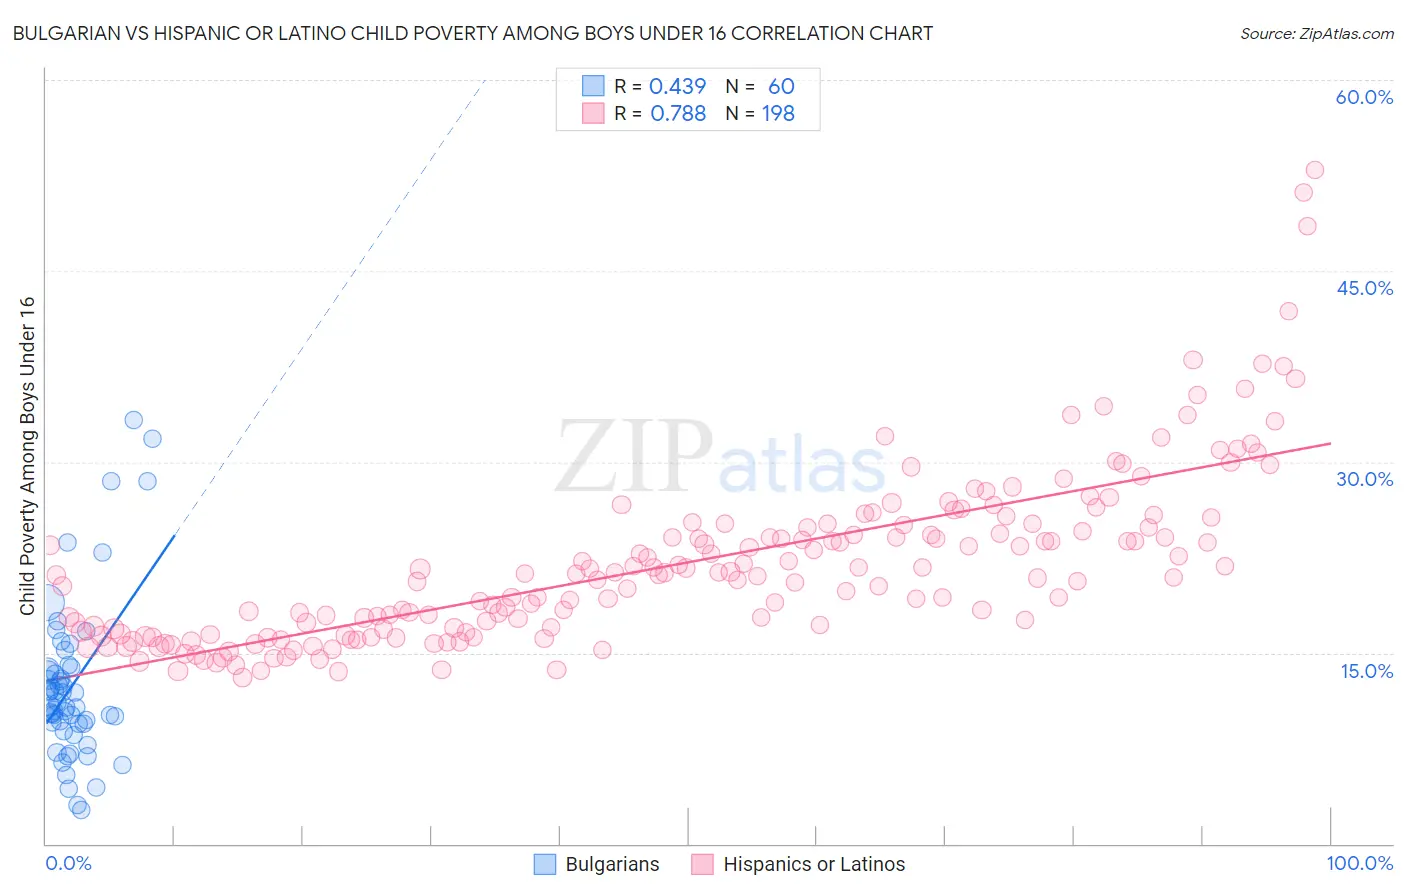 Bulgarian vs Hispanic or Latino Child Poverty Among Boys Under 16